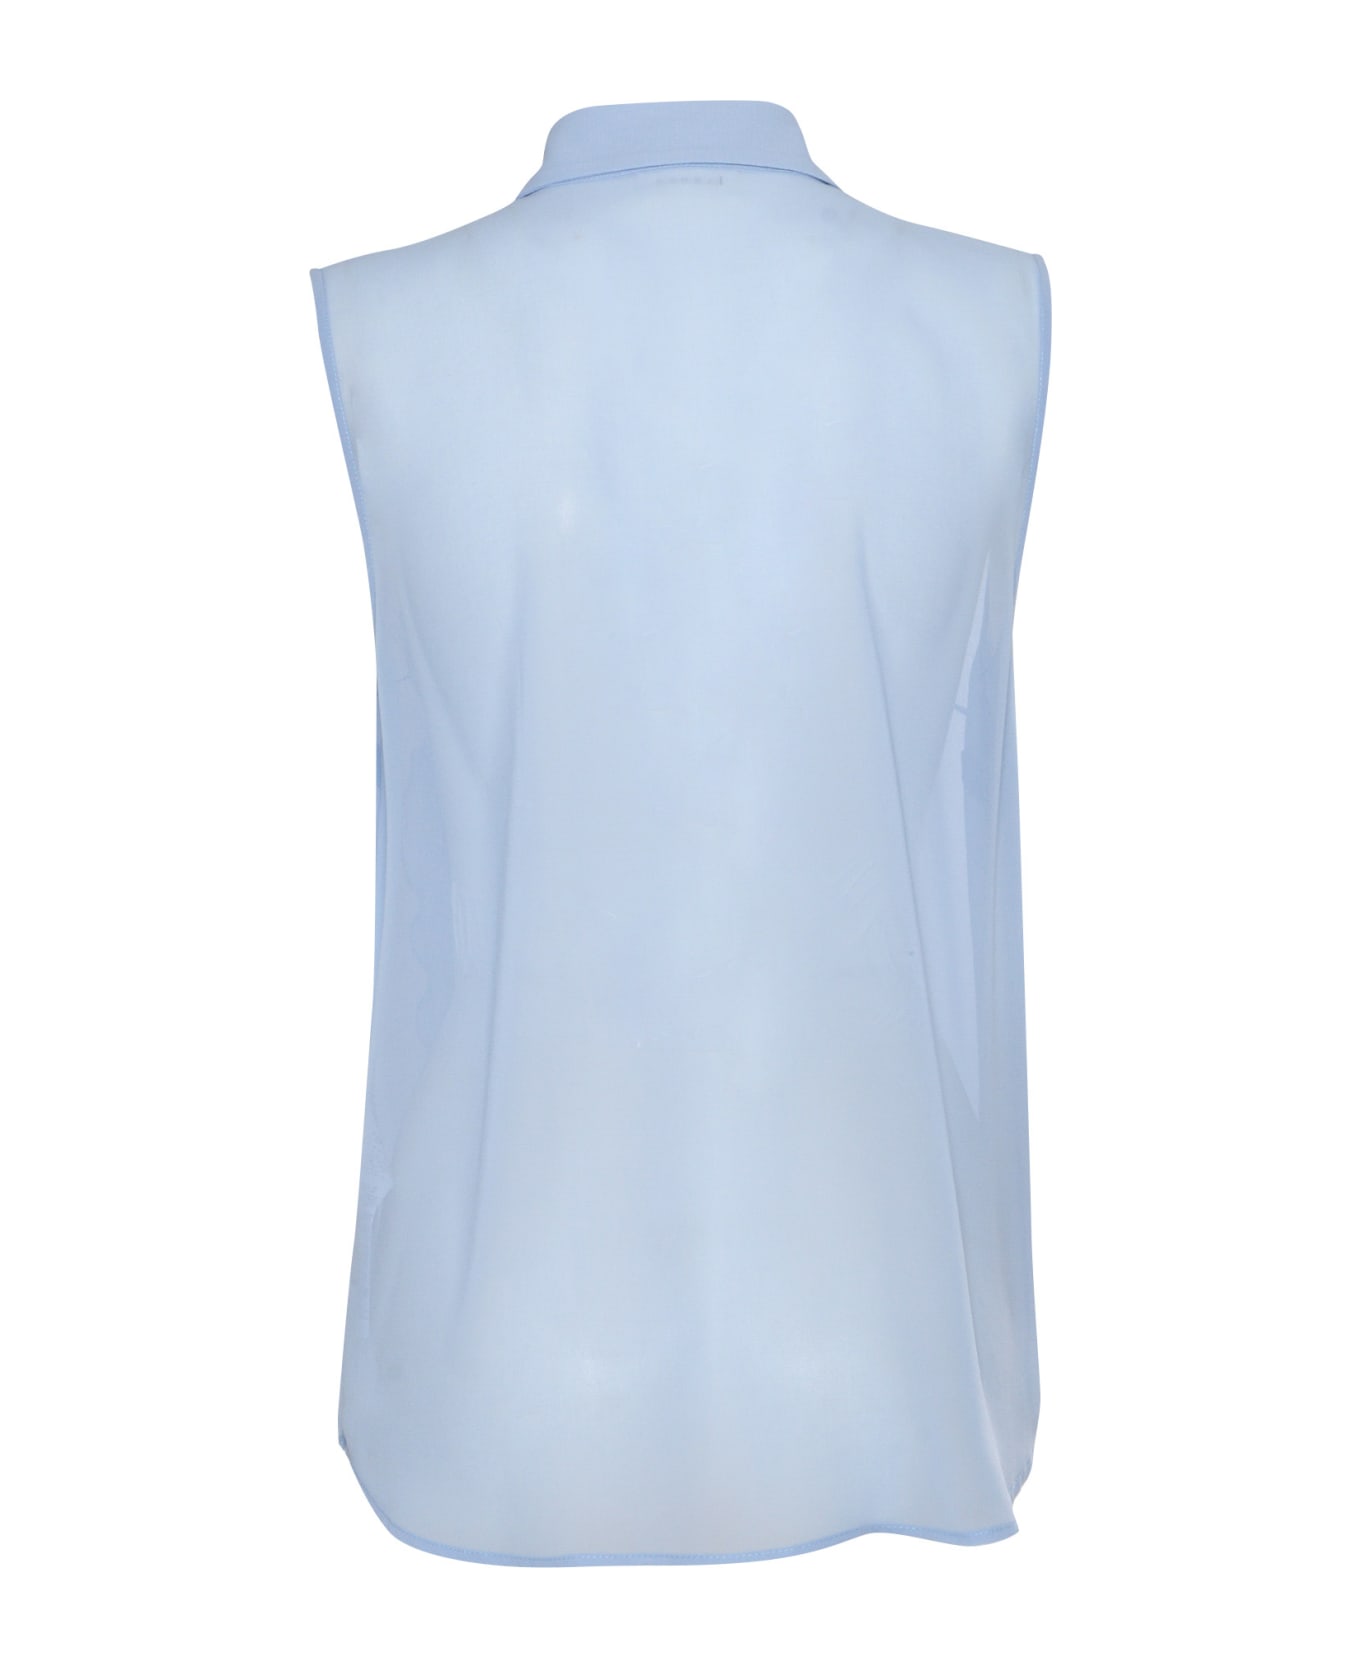 Parosh Sleeveless Shirt With Lace - LIGHT BLUE